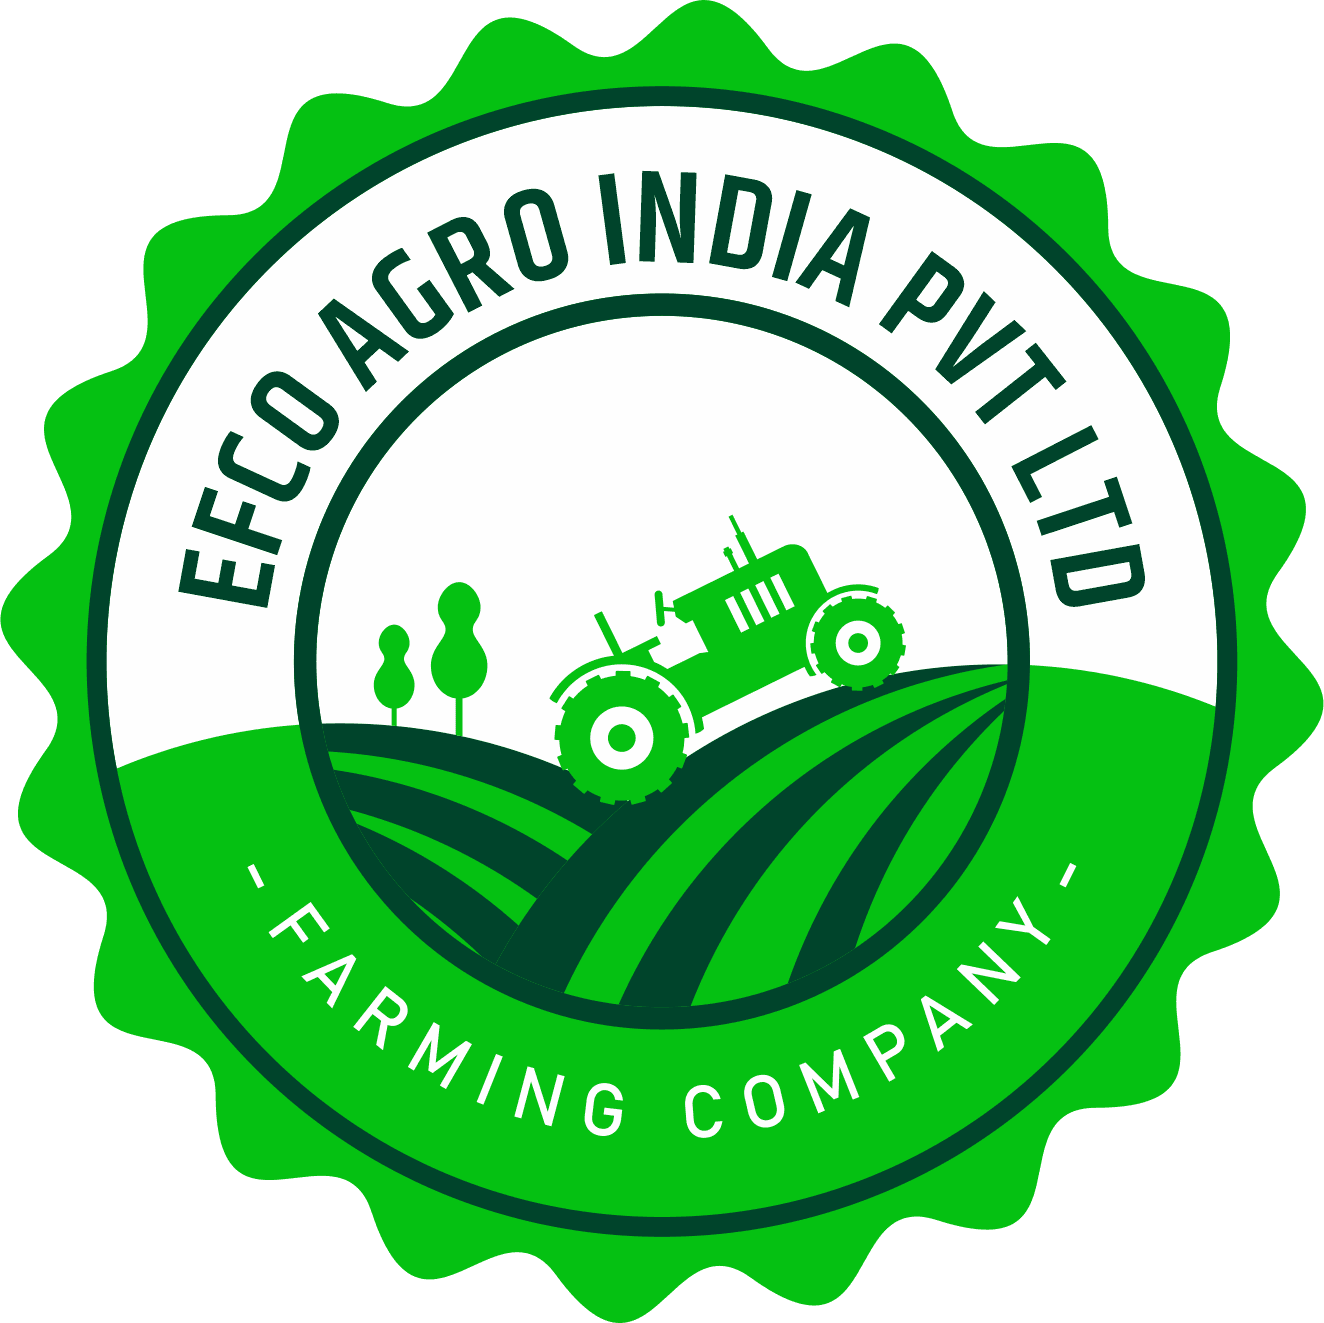 EFCO AGRO INDIA PVT LTD